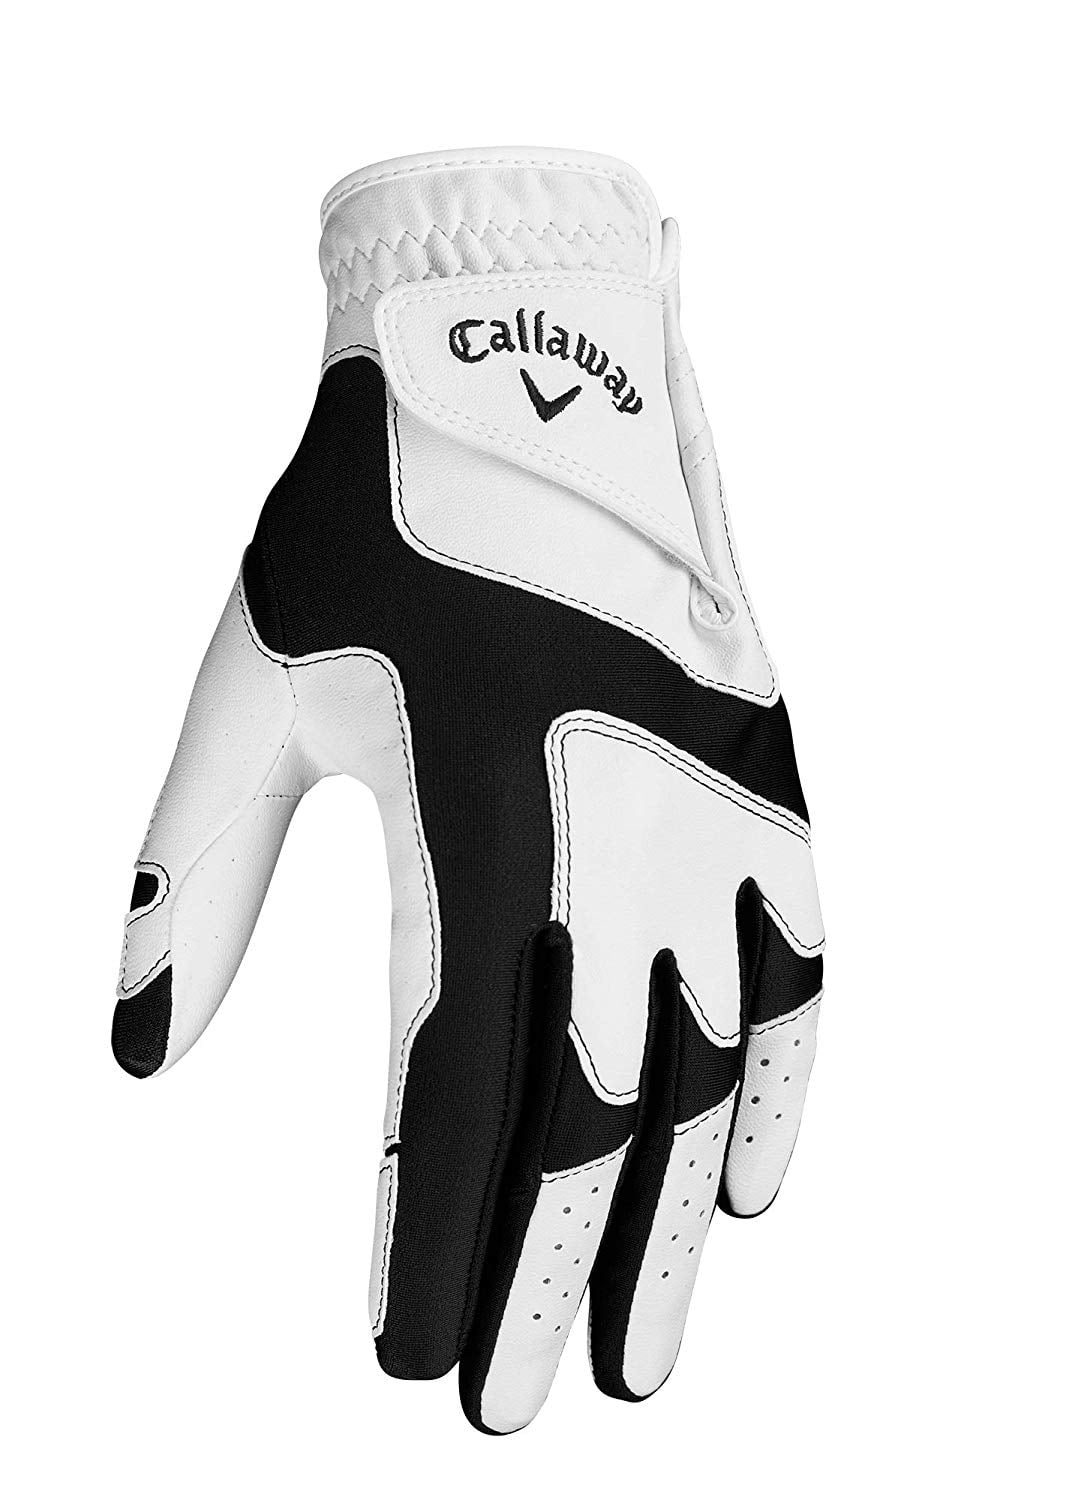 Callaway Opti Fit Golf Glove (LADIES, LEFT, WHITE) UNIVERSAL FIT Golf ...